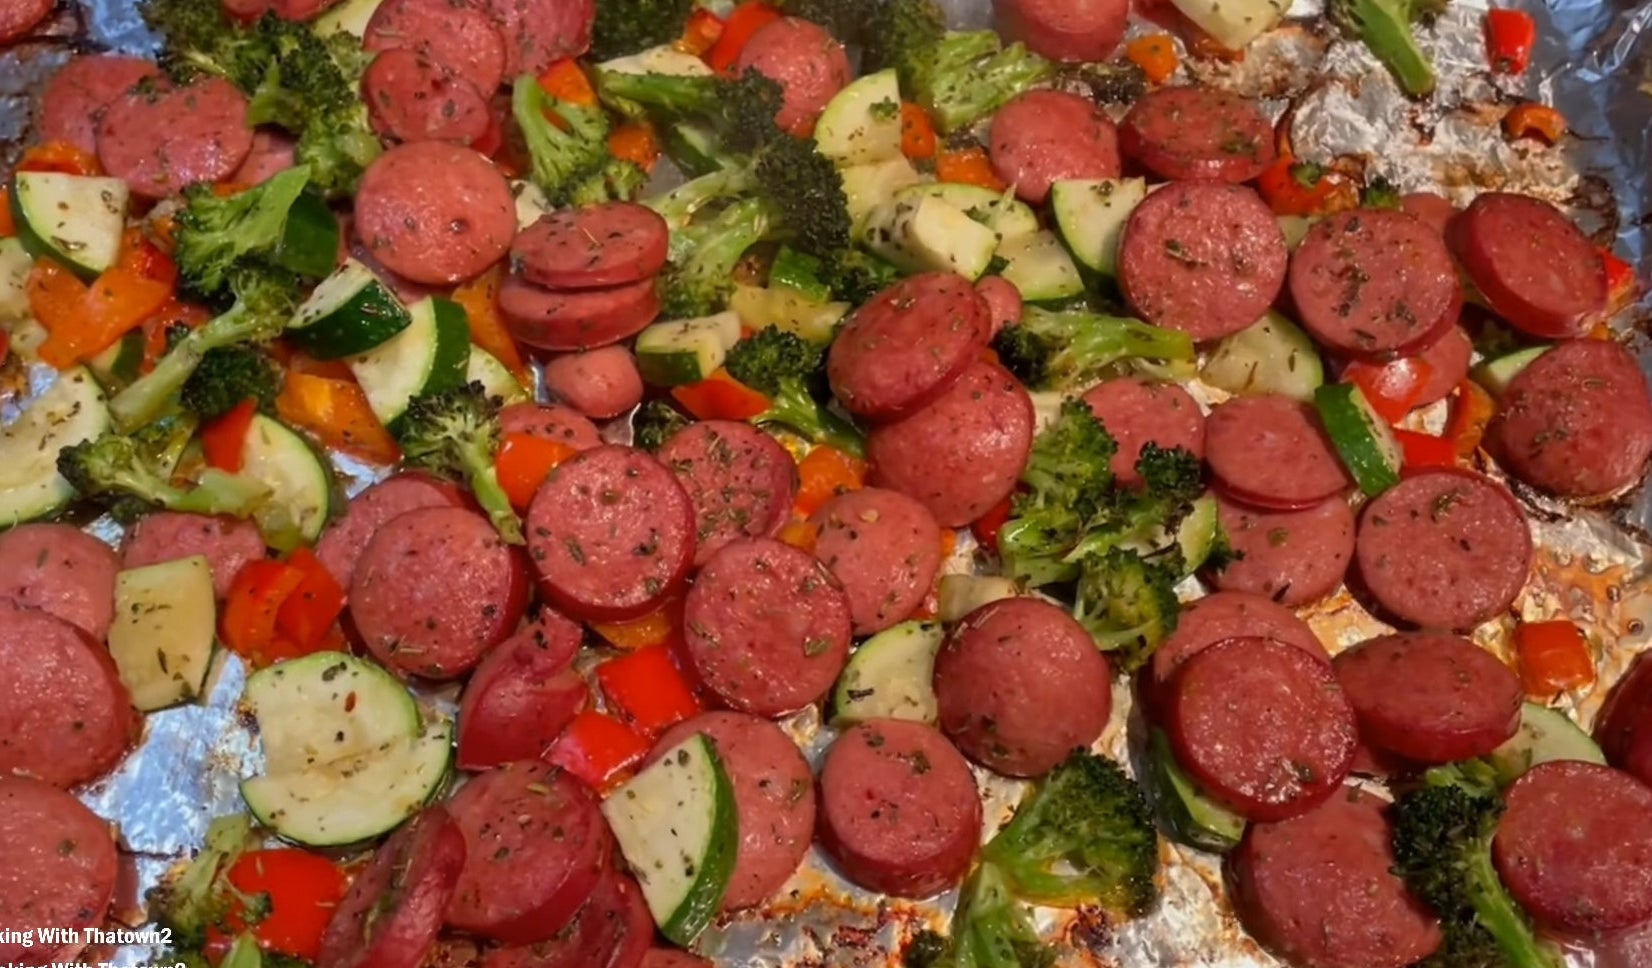 sausage cons and veggies on a sheet pan